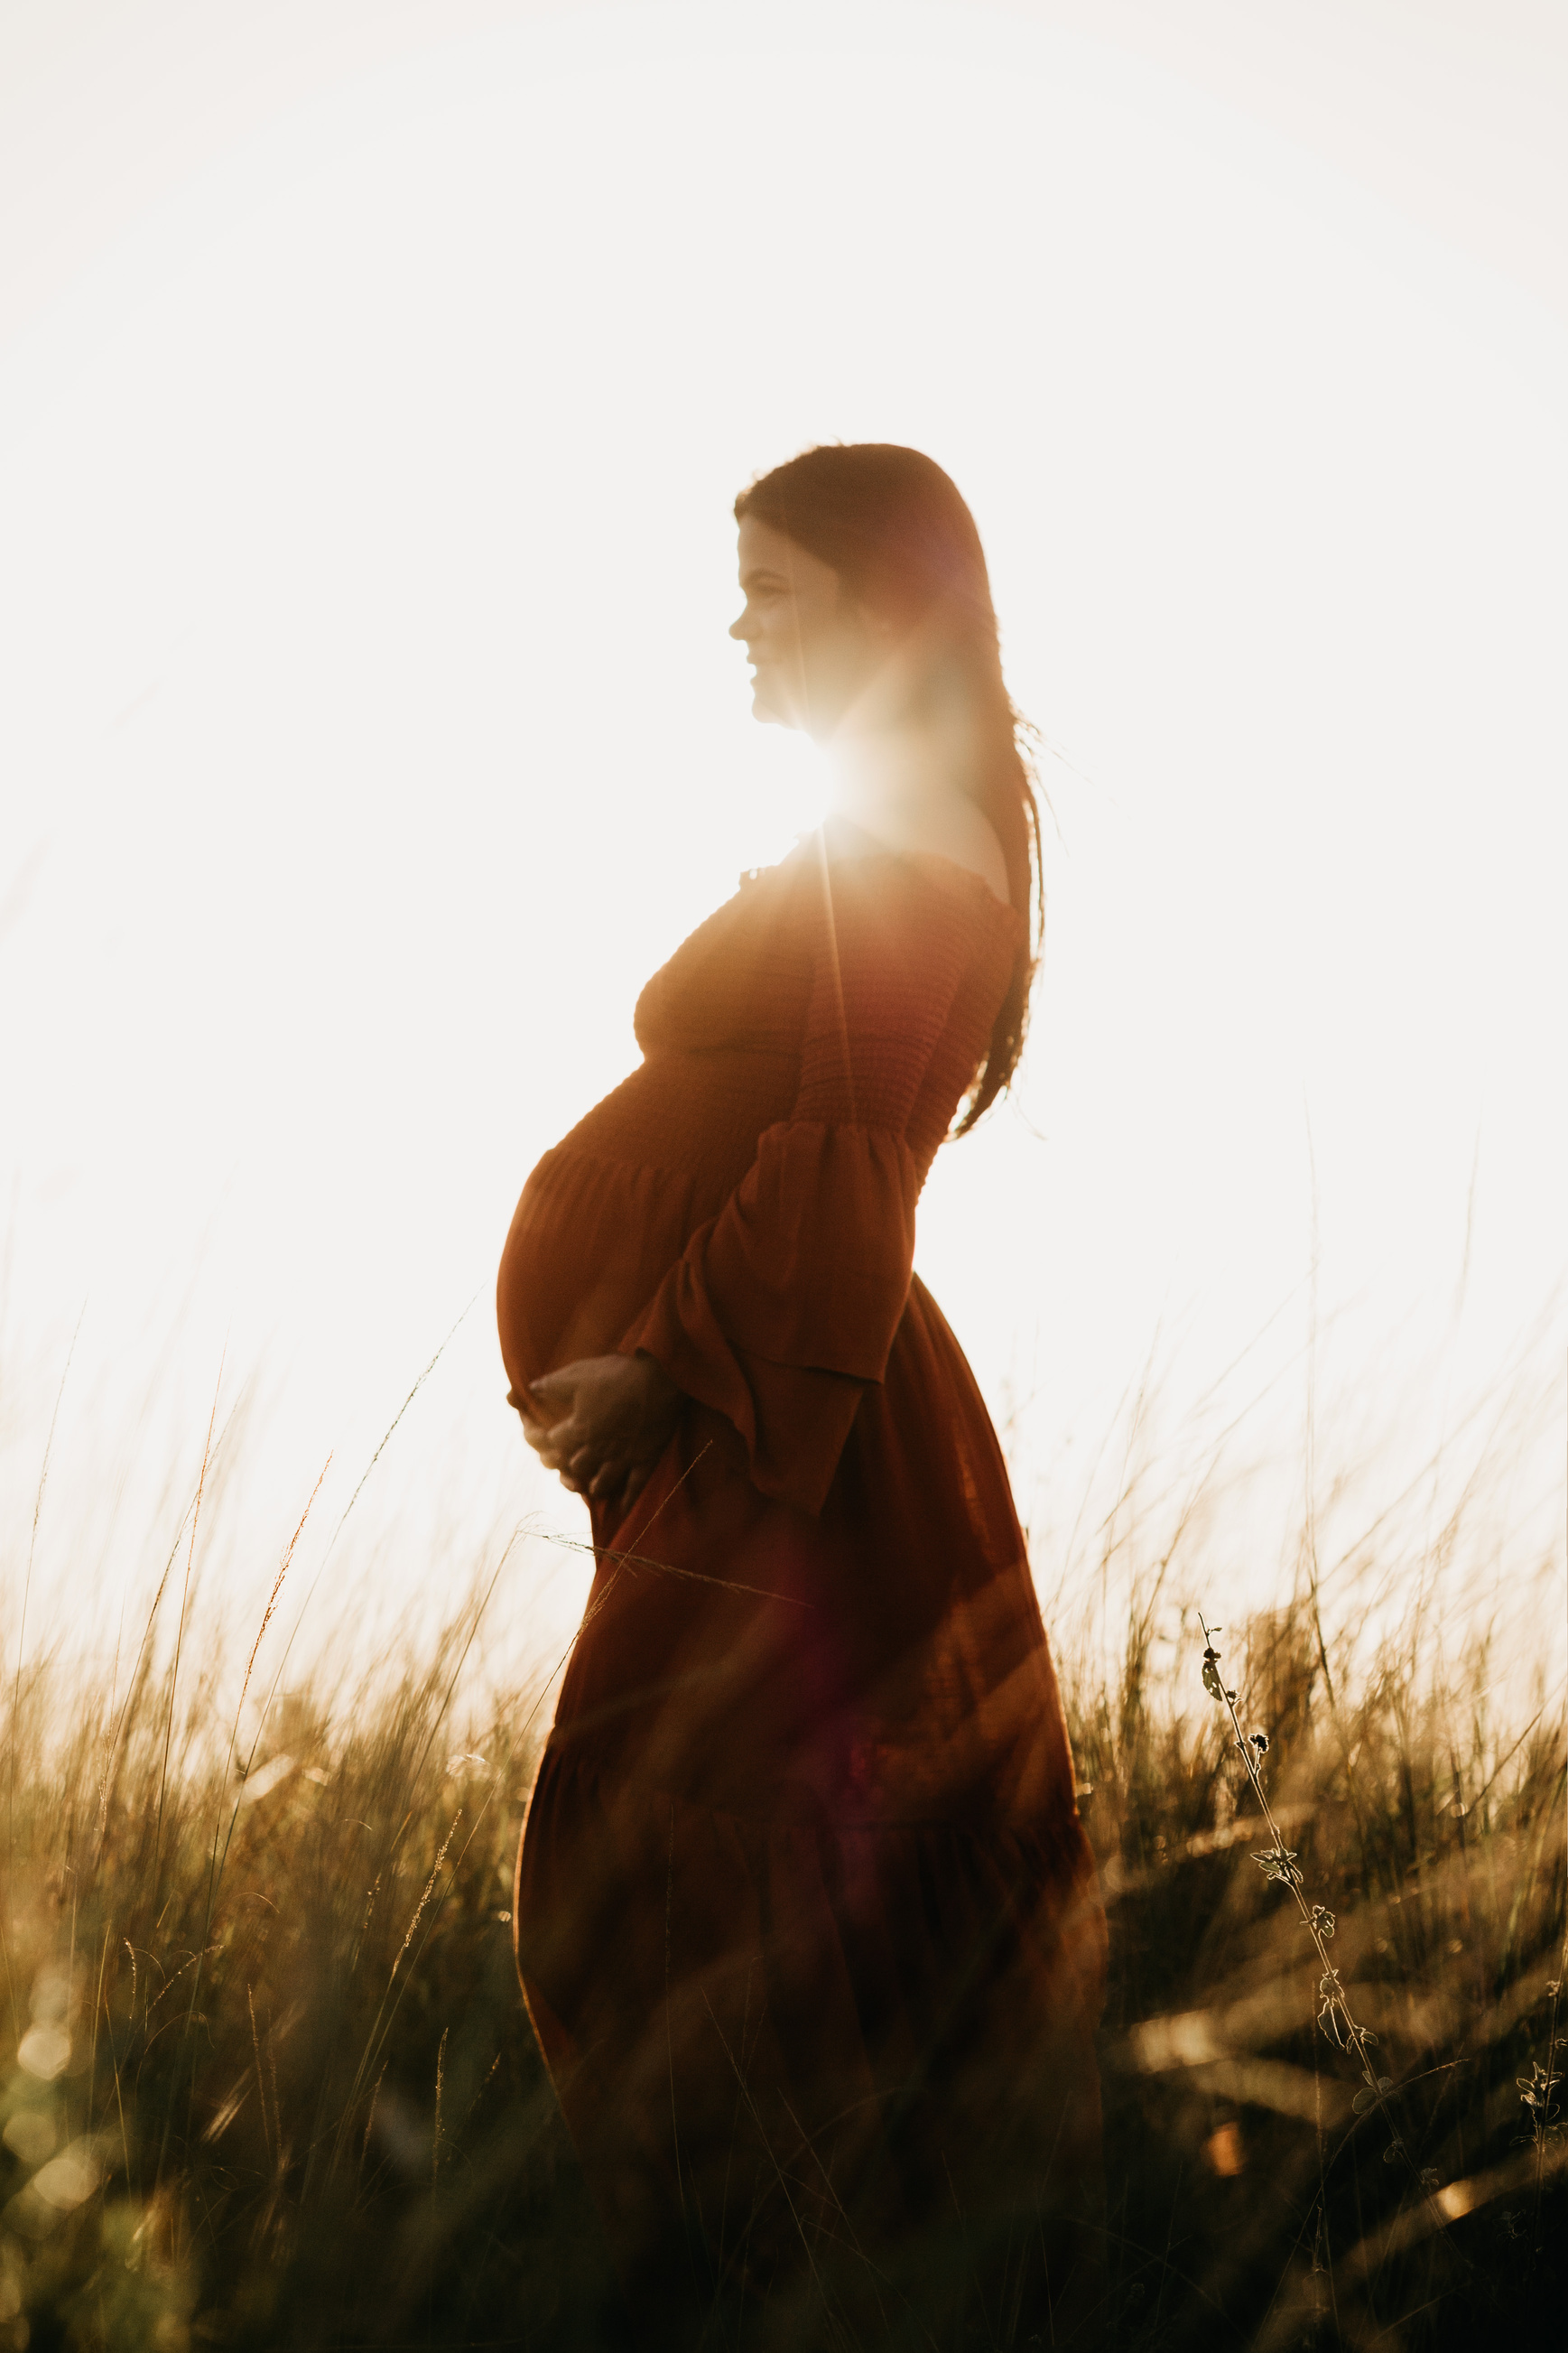 Pregnant woman in grassy field